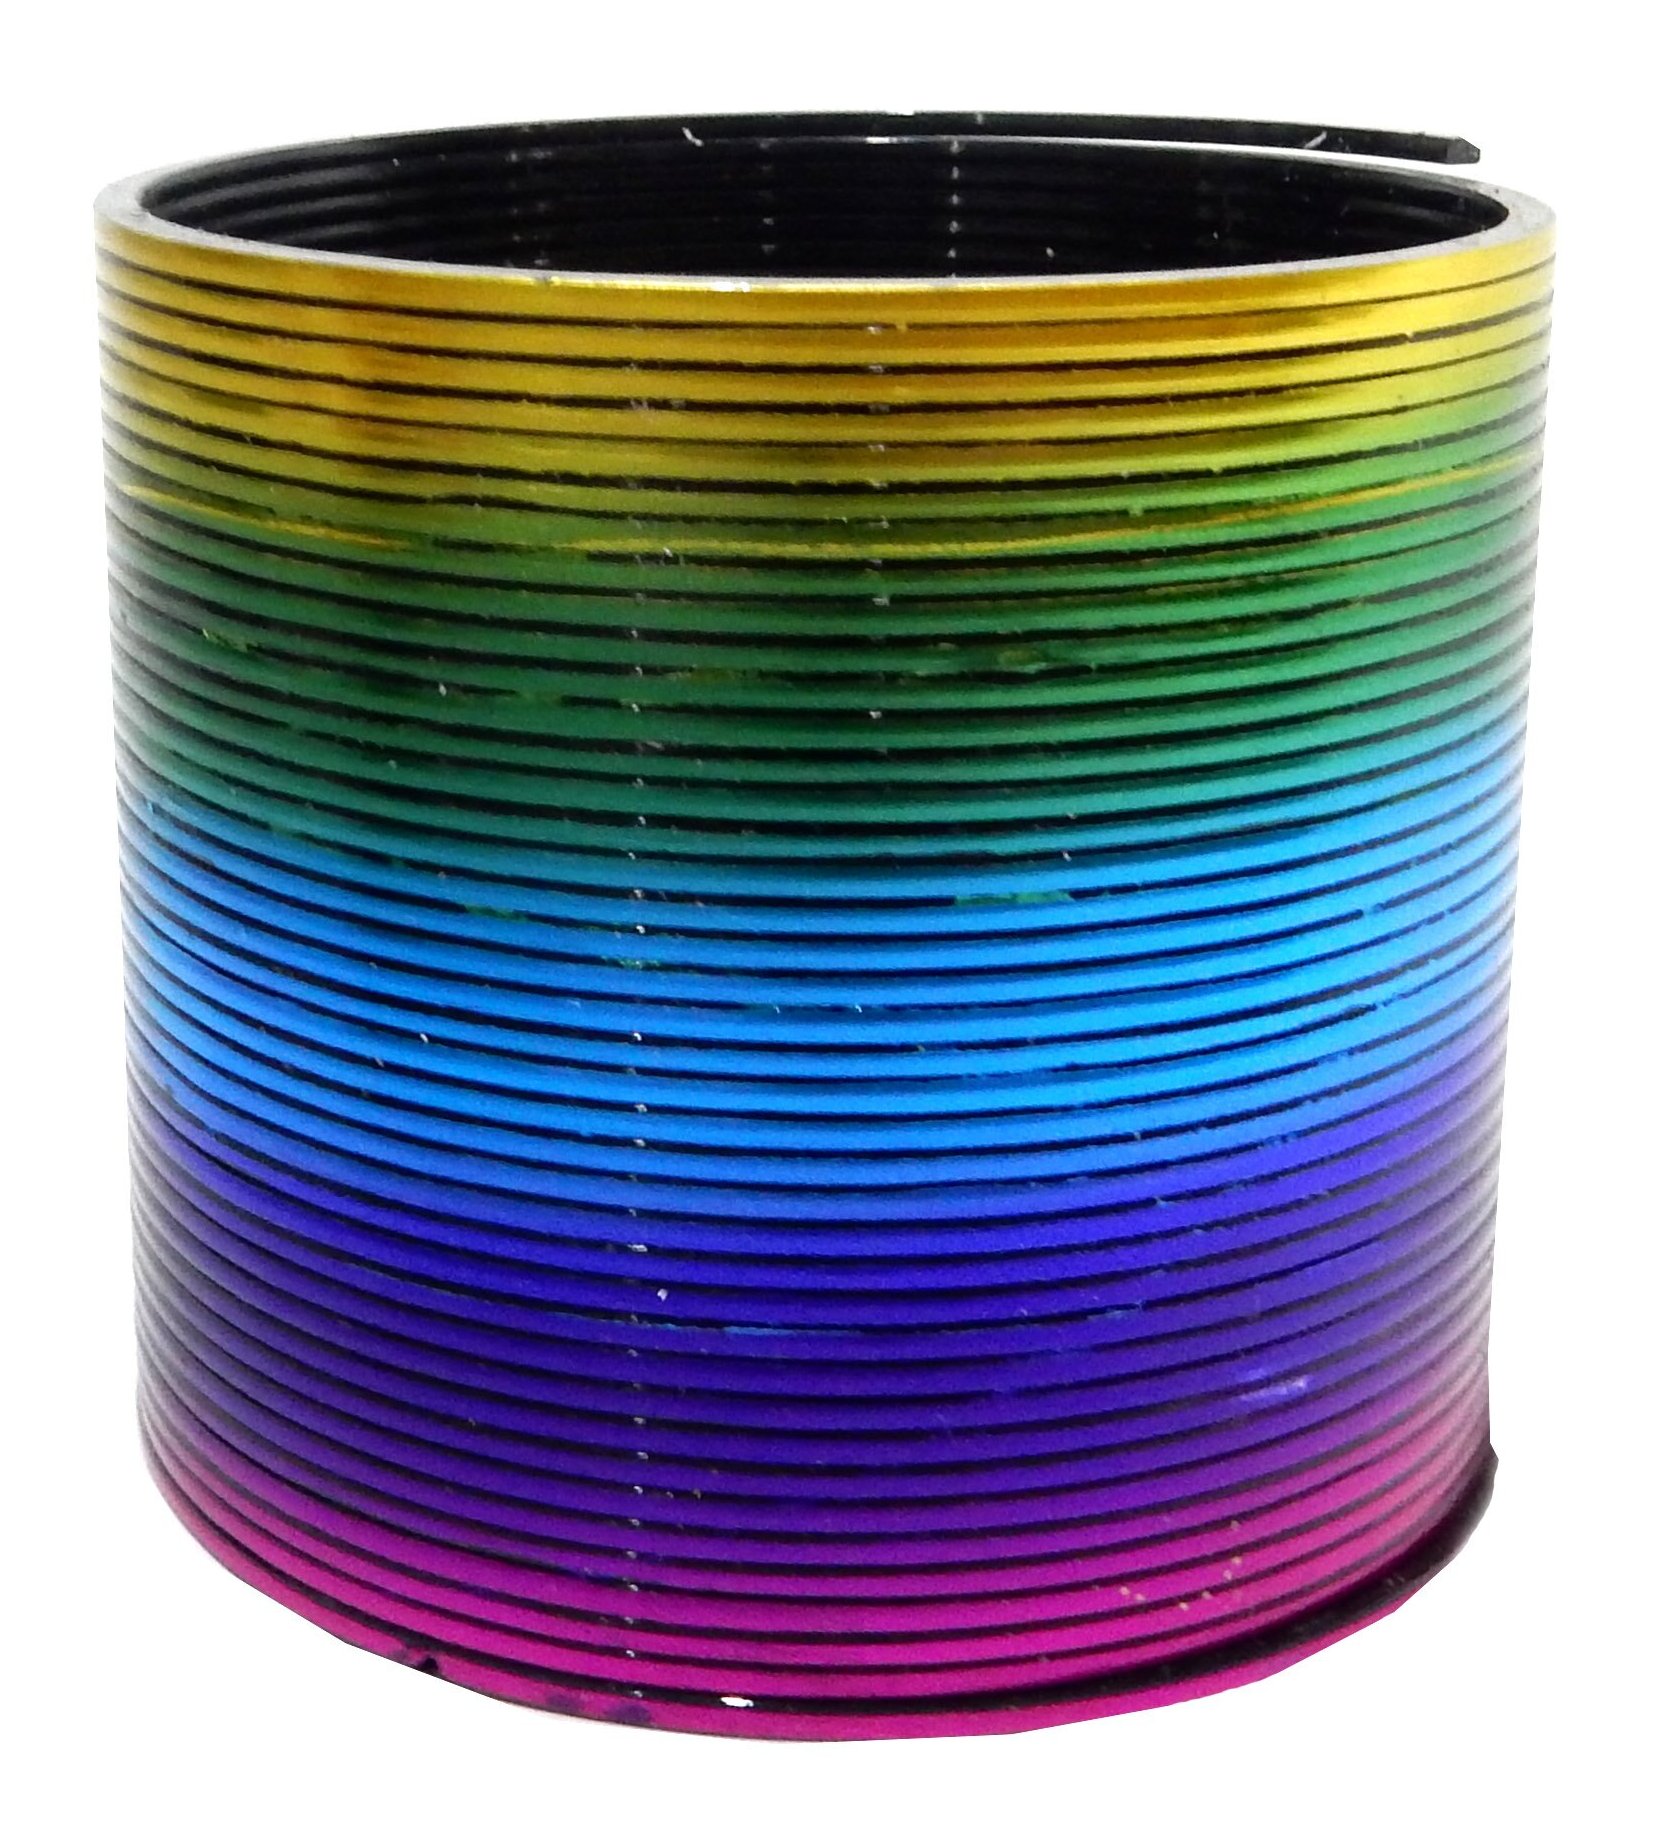 Пружинка-радуга «Голография» Н7512-8S, 7,5 см х 7,5 см х 6,5 см., 1 шт. / Микс